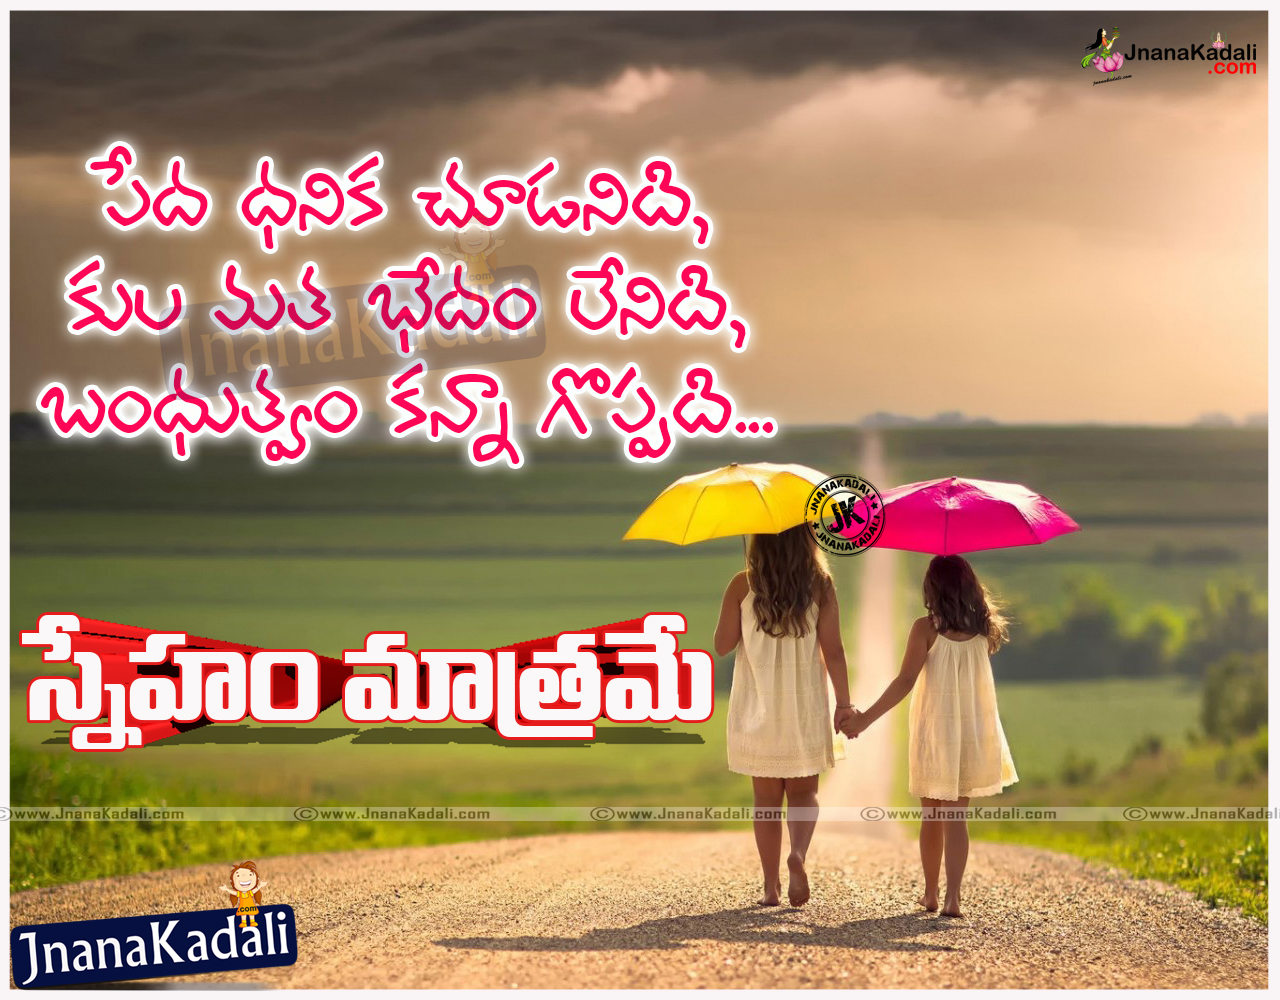 Beautiful Telugu Friendship Messages with Pictures | JNANA KADALI.COM